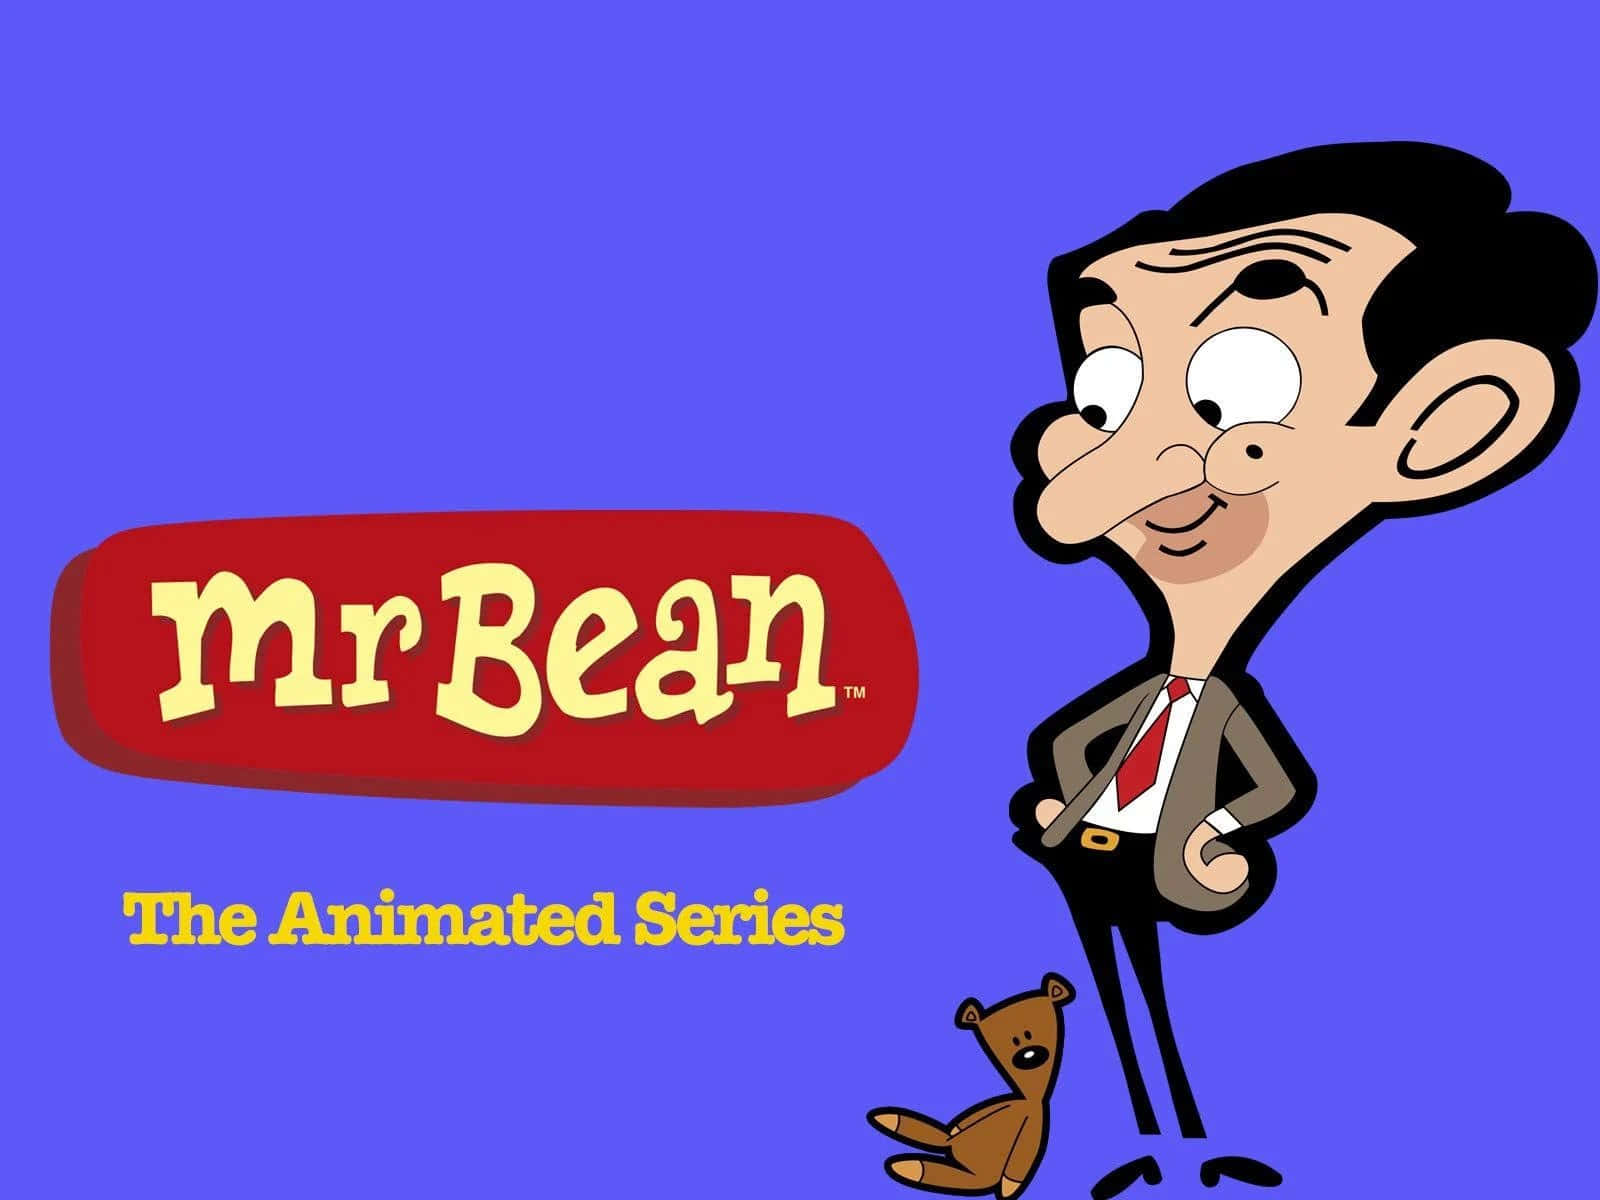 Mr. Bean's Hilarious Face in a Vibrant Suit